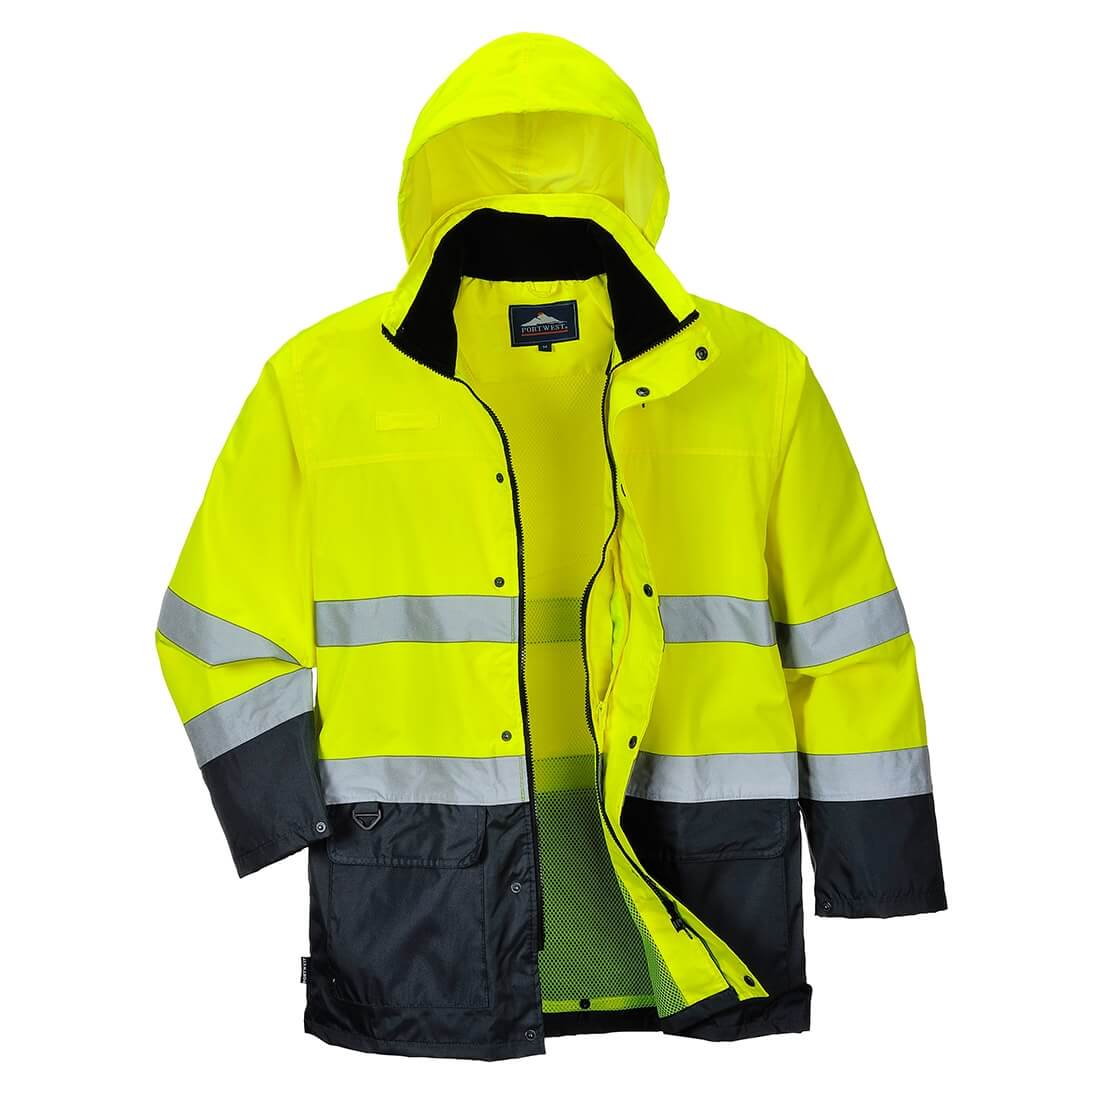 Lite Two-Tone Traffic Jacket - Safetywear